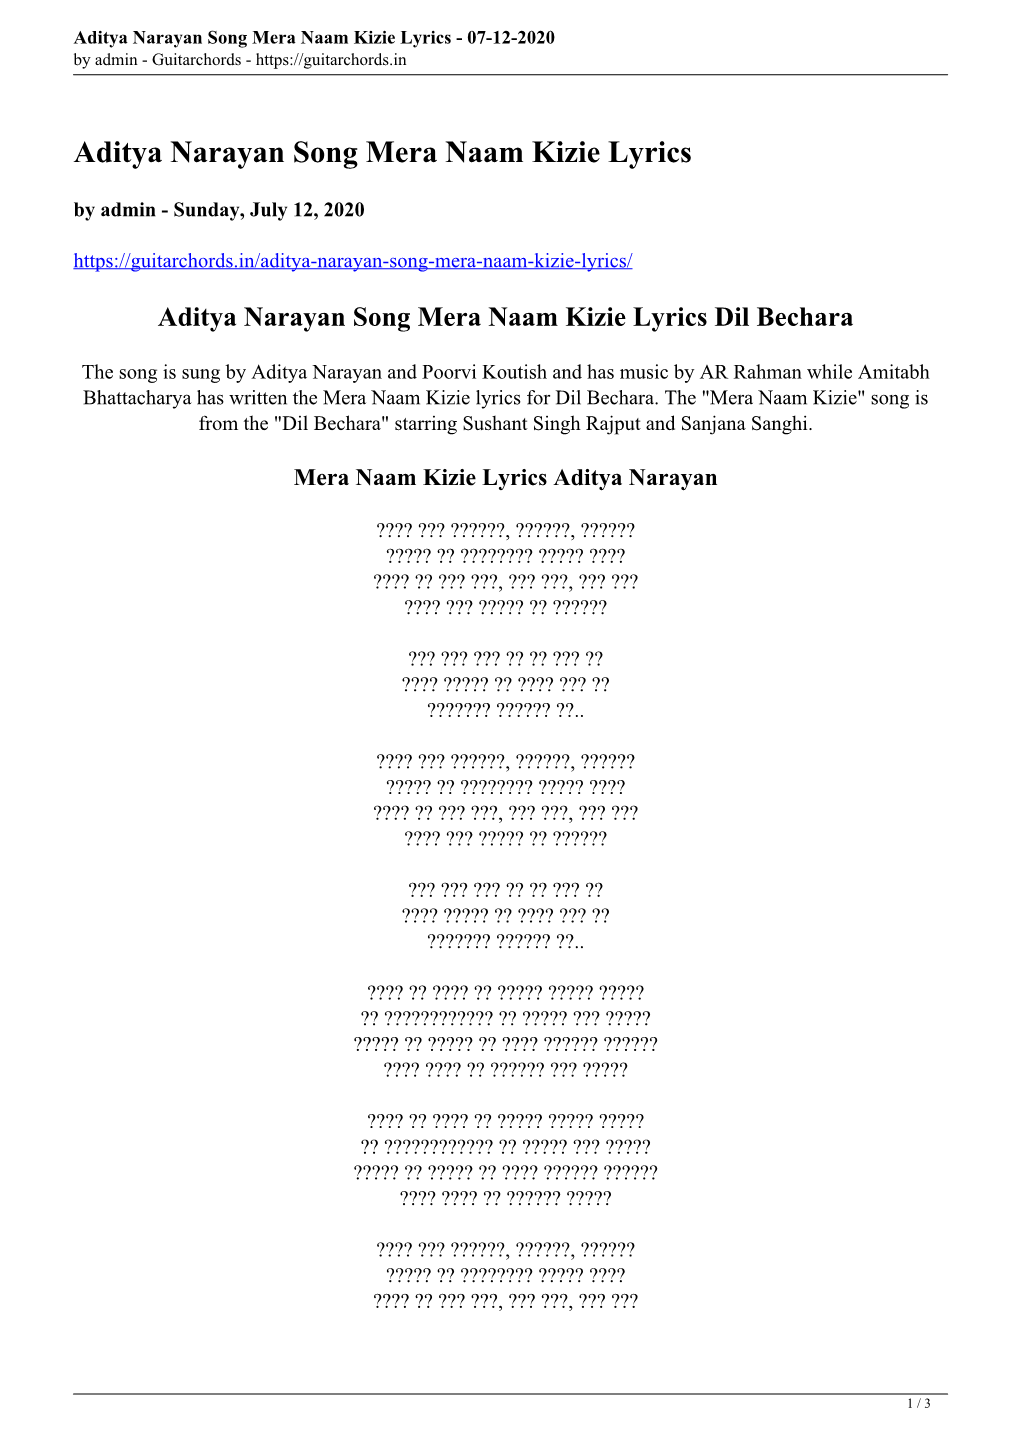 Aditya Narayan Song Mera Naam Kizie Lyrics - 07-12-2020 by Admin - Guitarchords